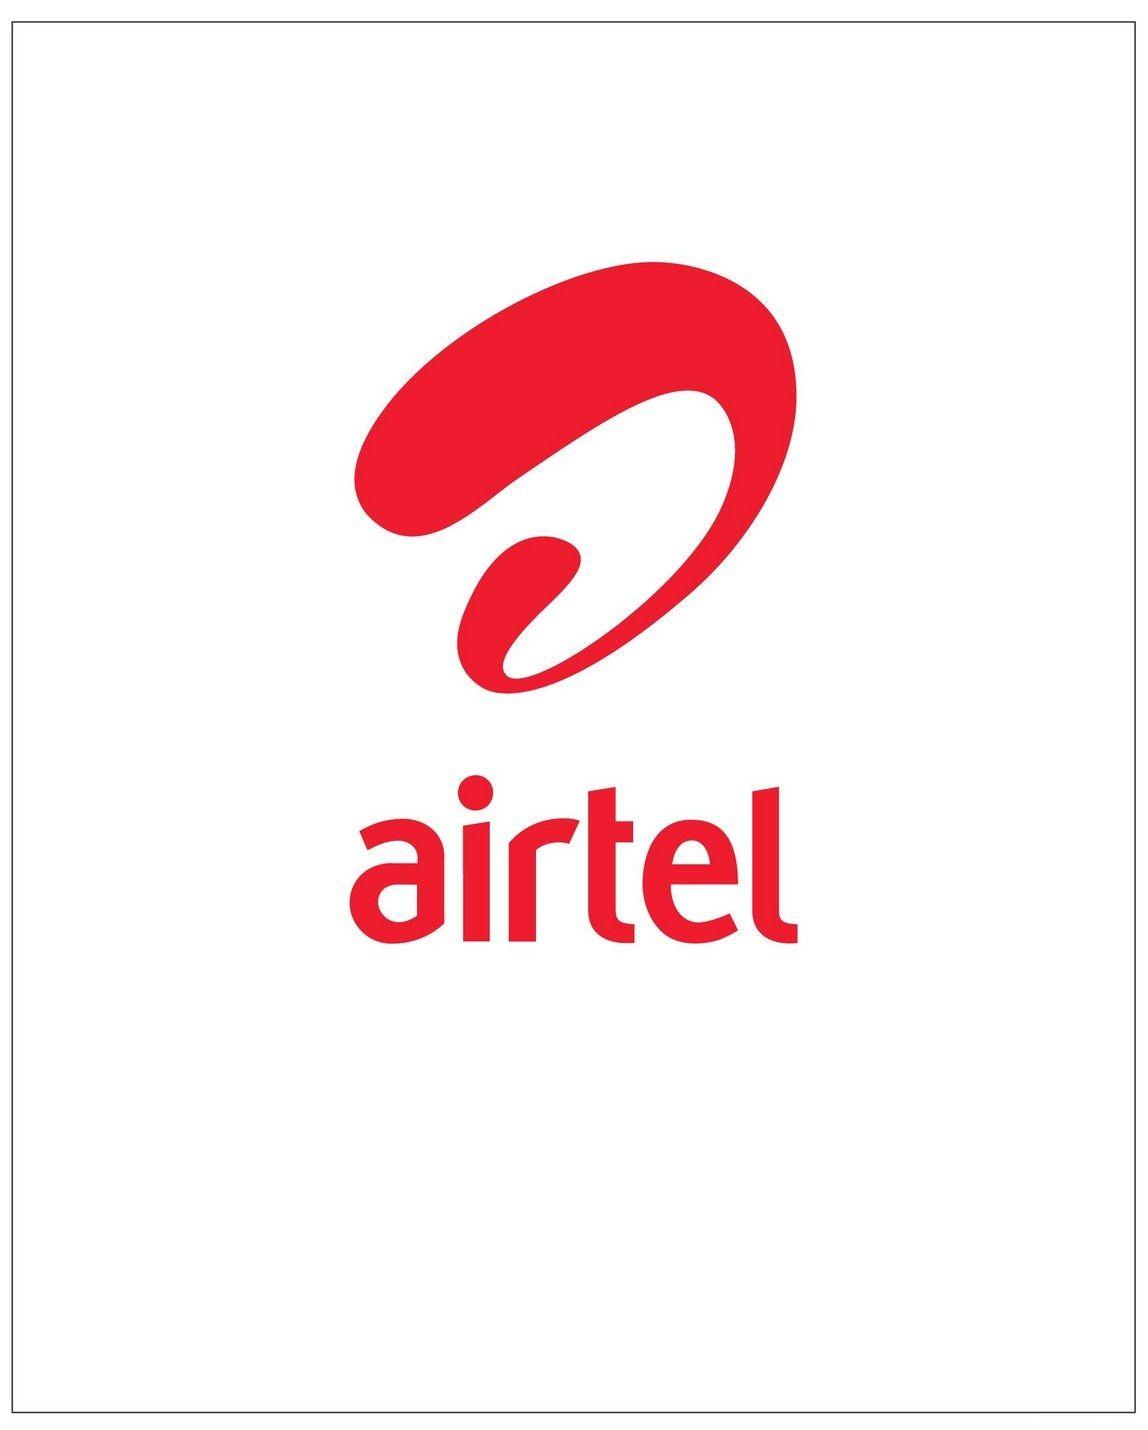 best telecommunication image. A logo, Bharti